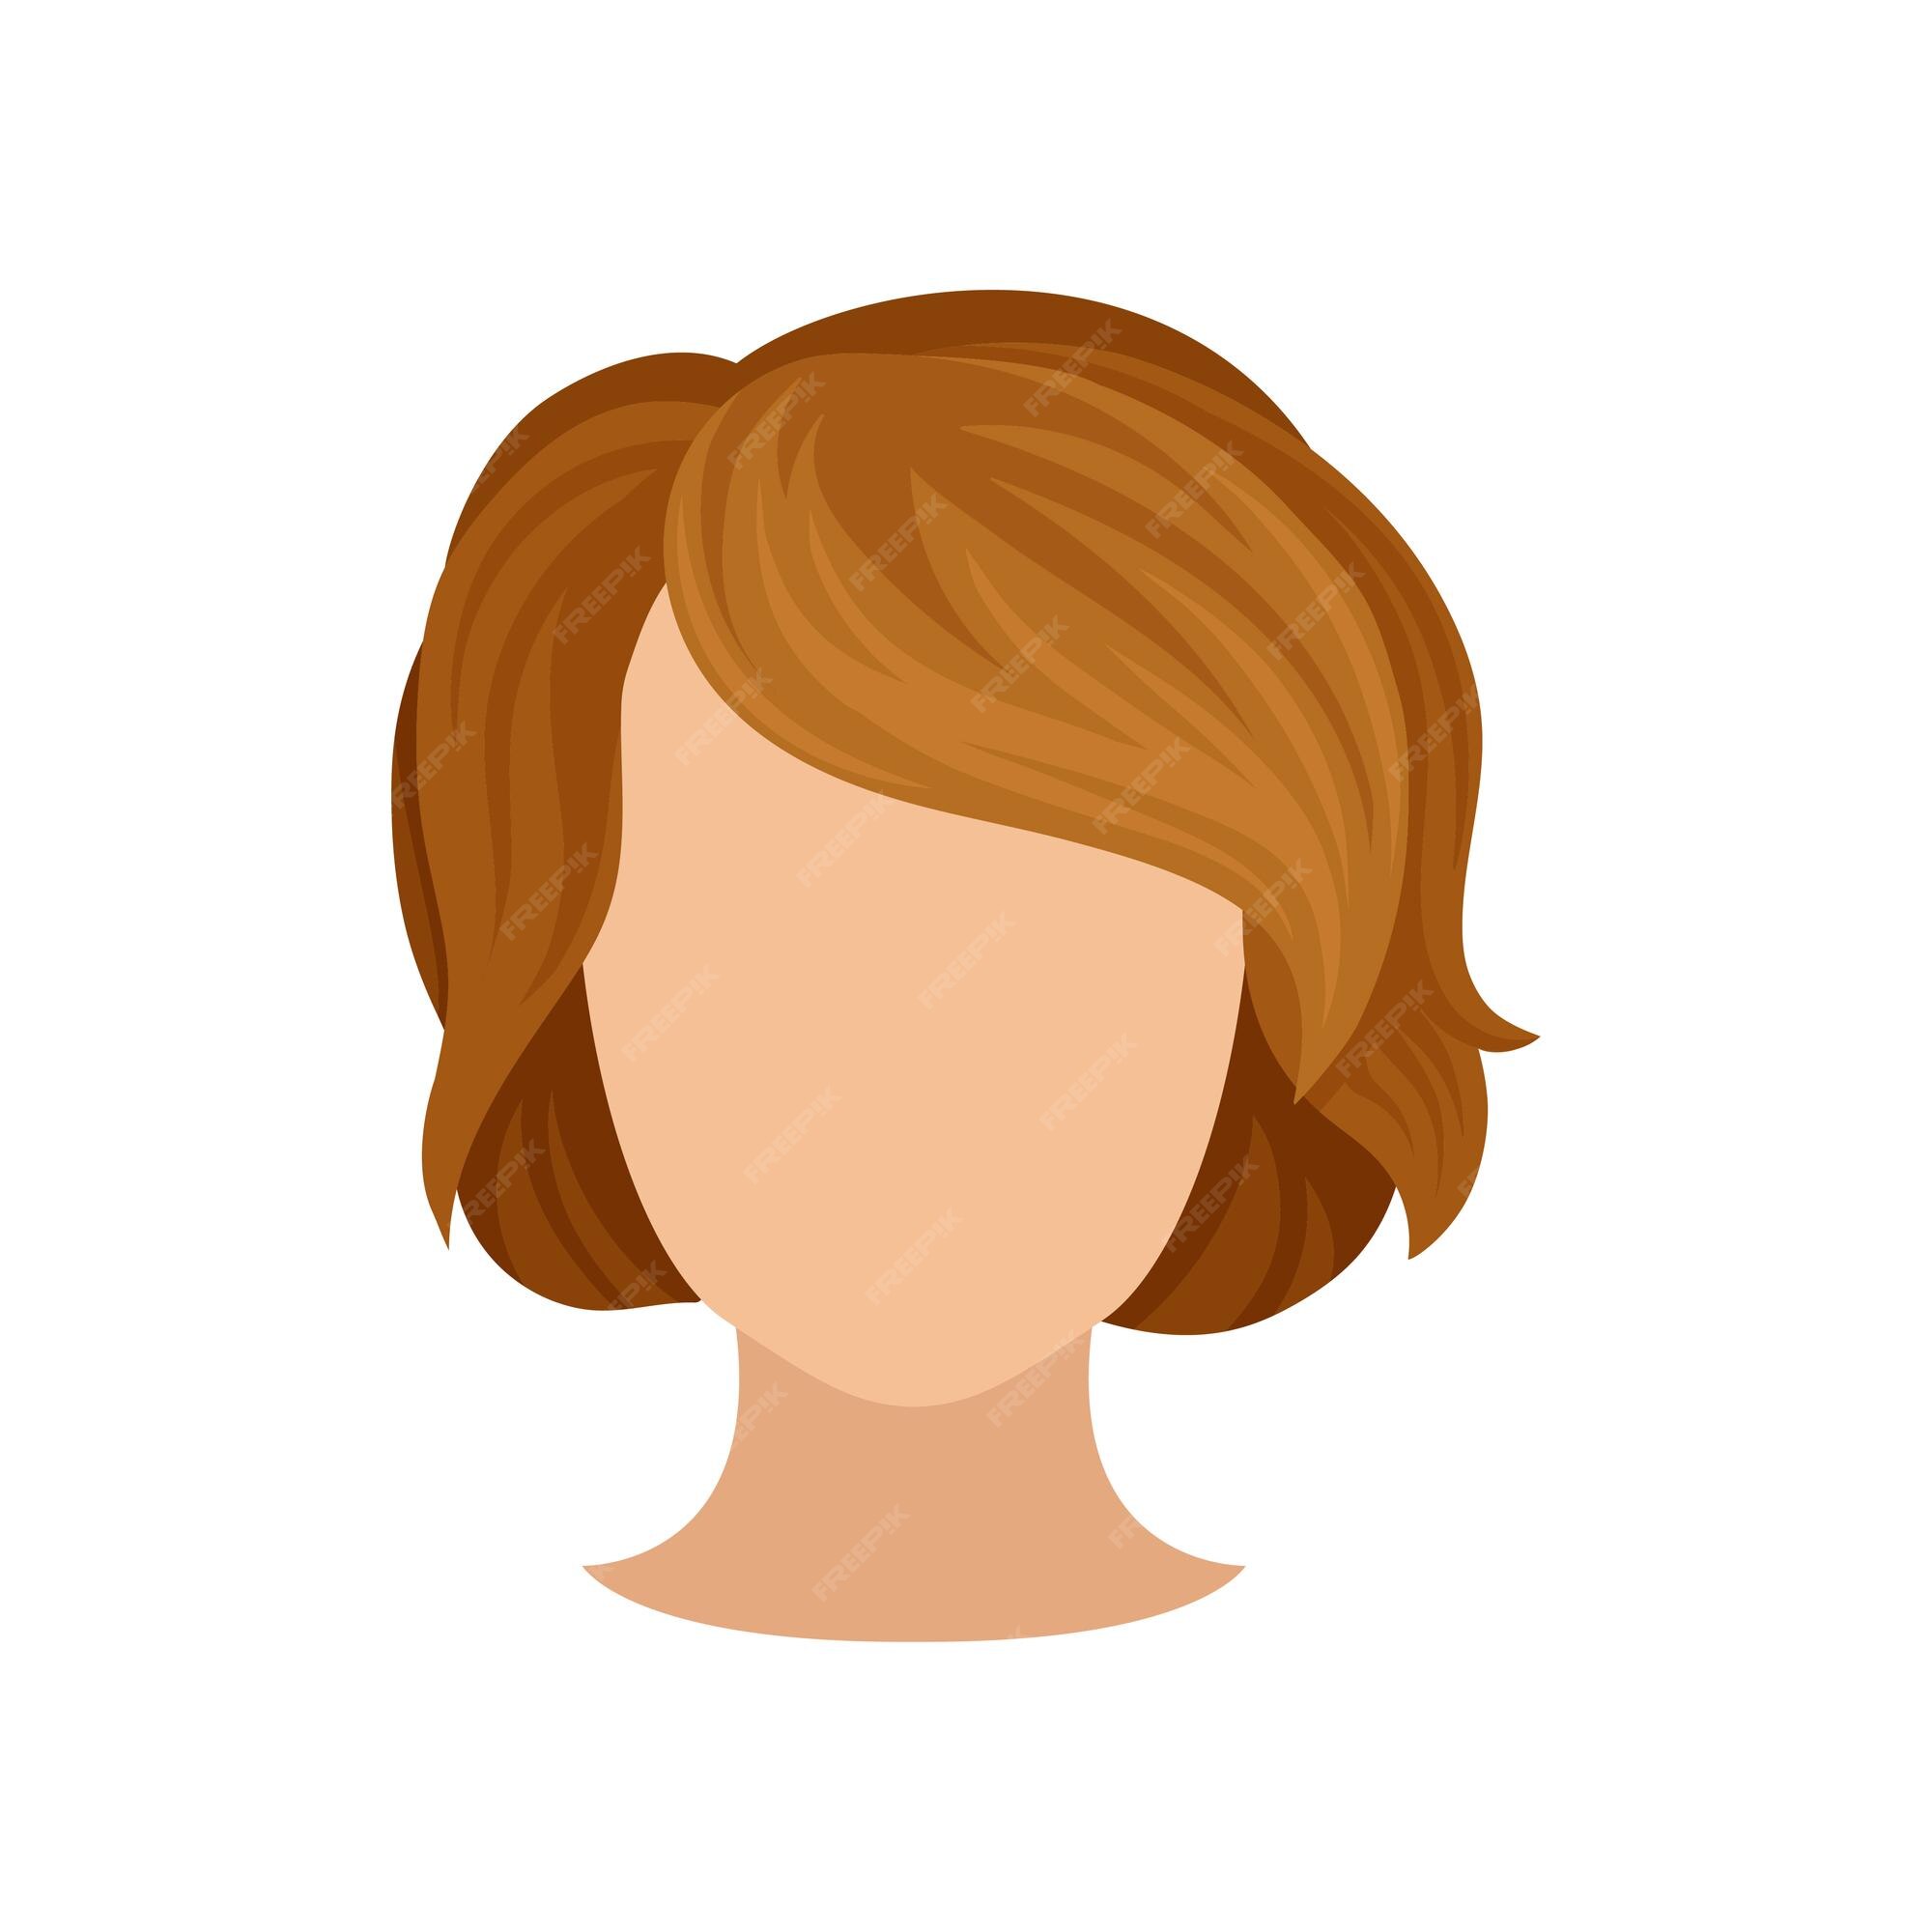 Short hair Vectors & Illustrations for Free Download | Freepik